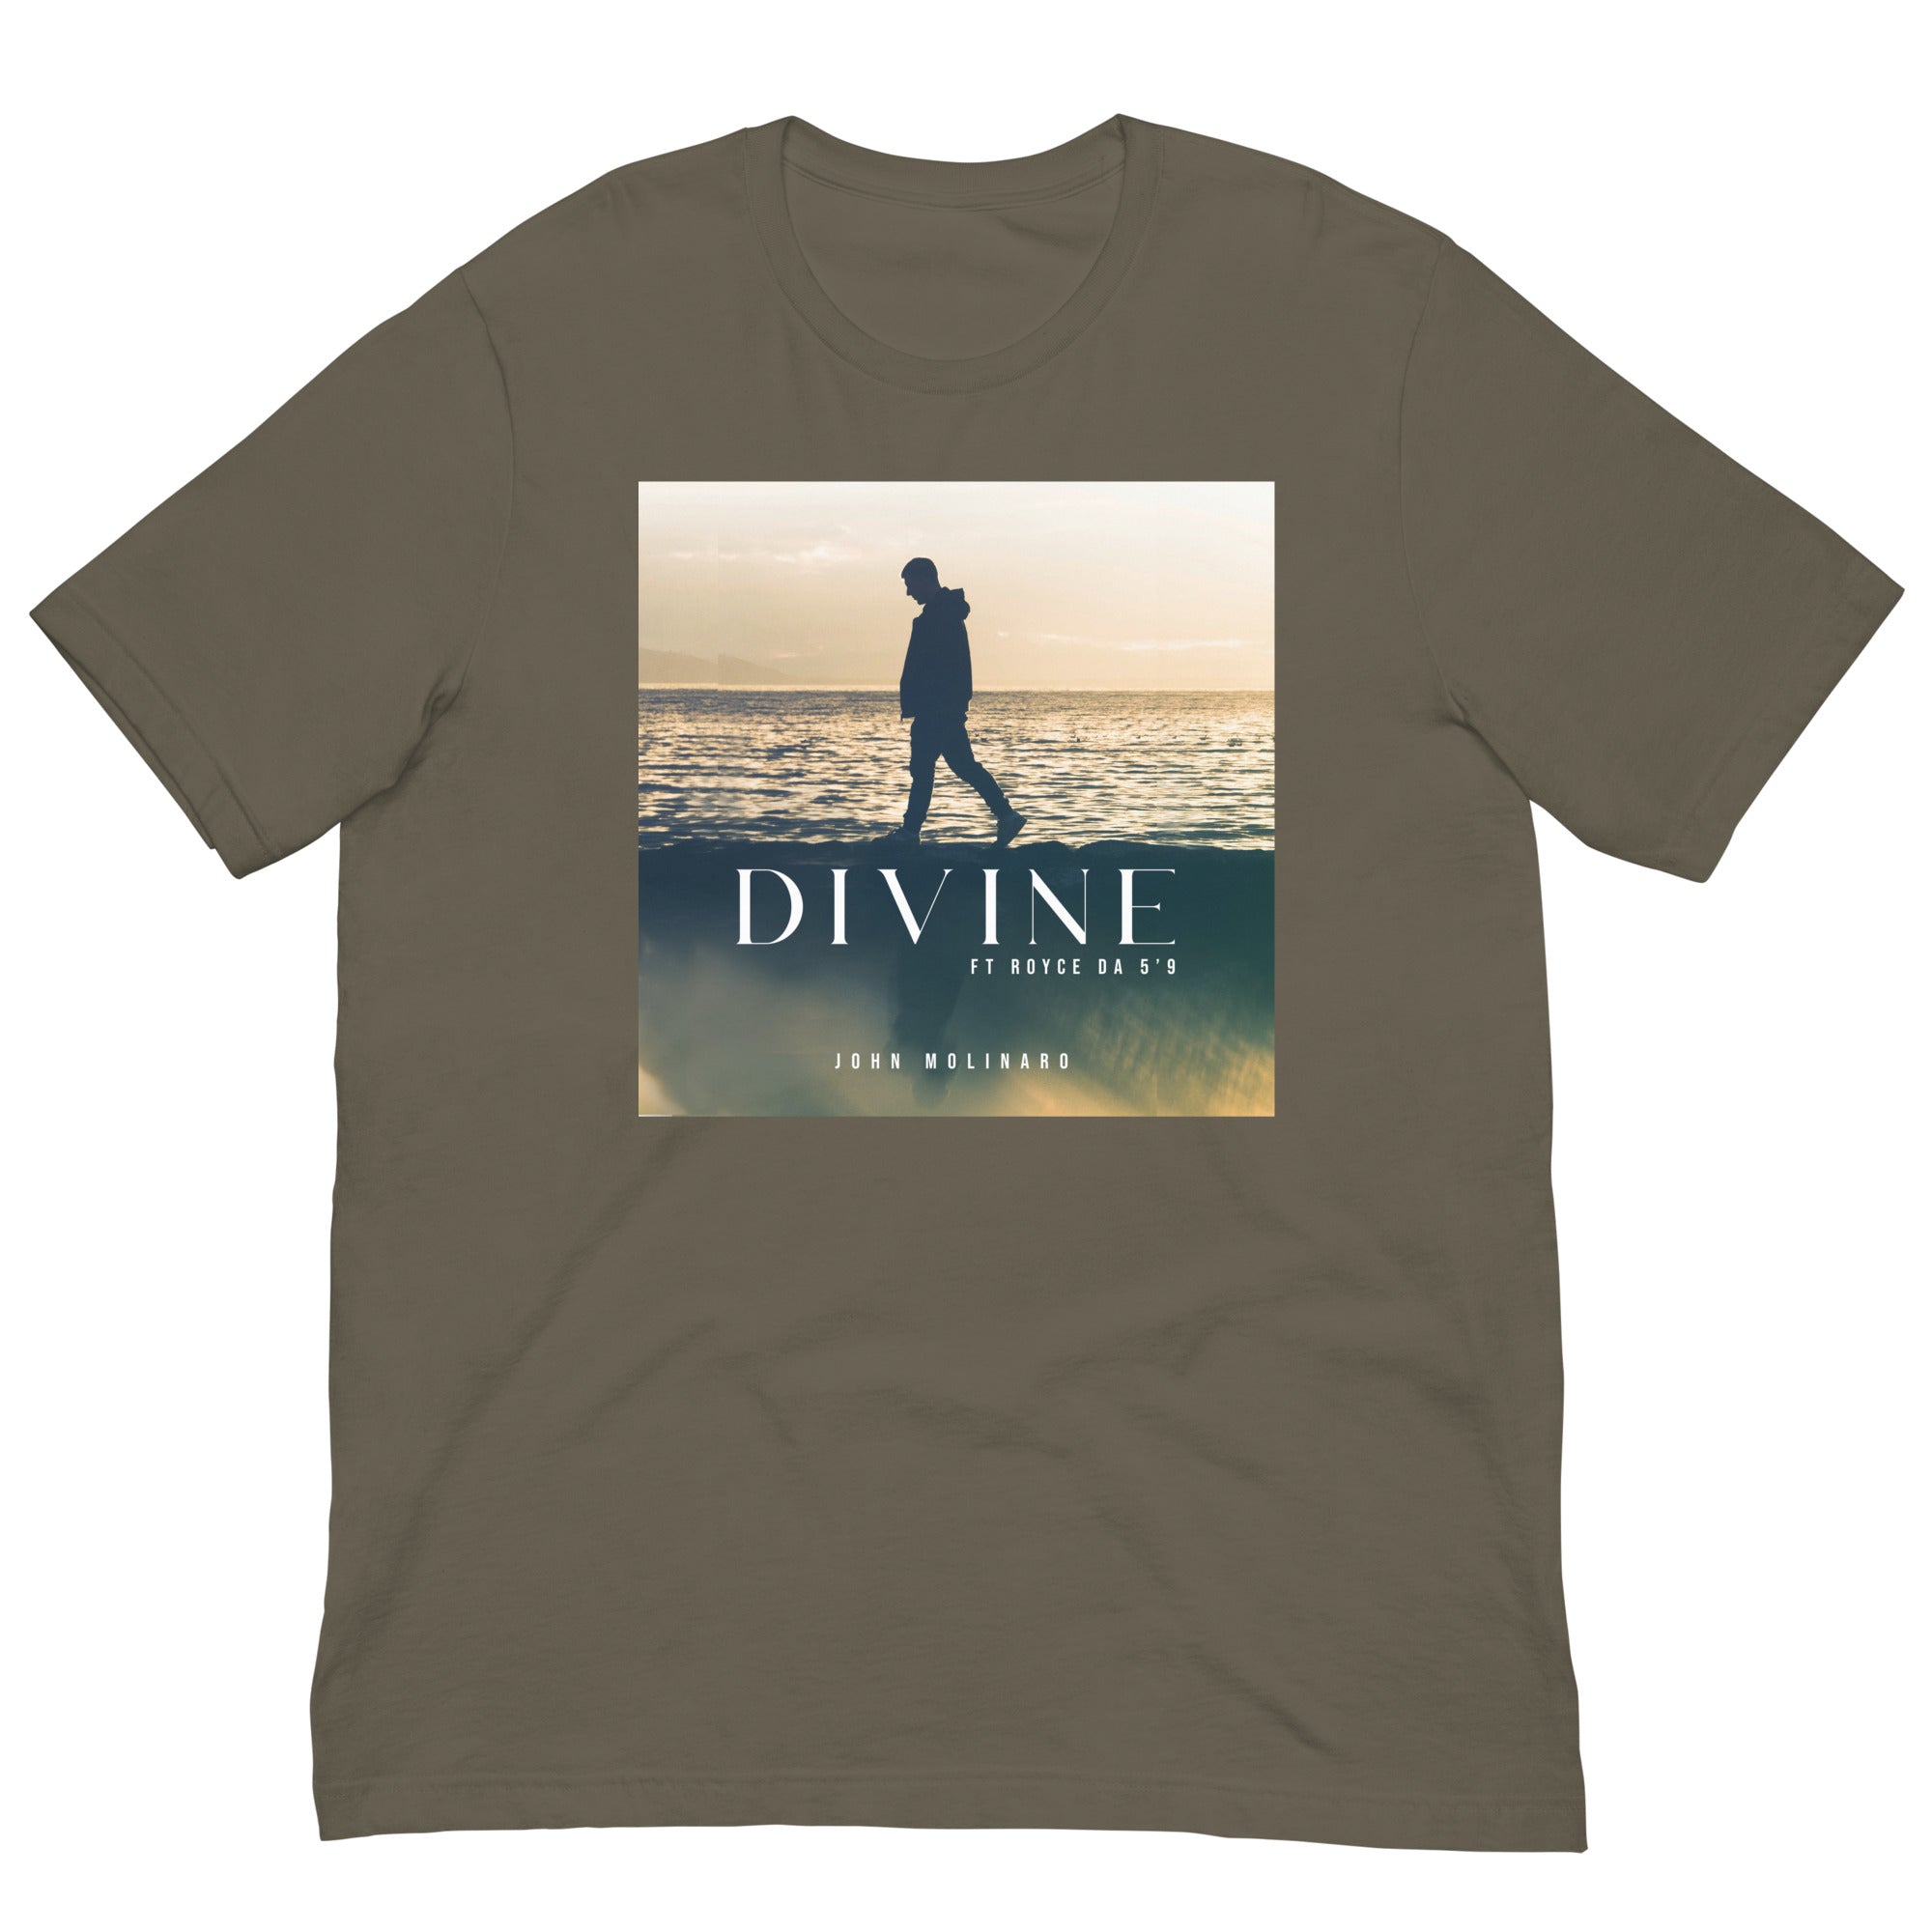 John Molinaro - "Divine" - t-shirt